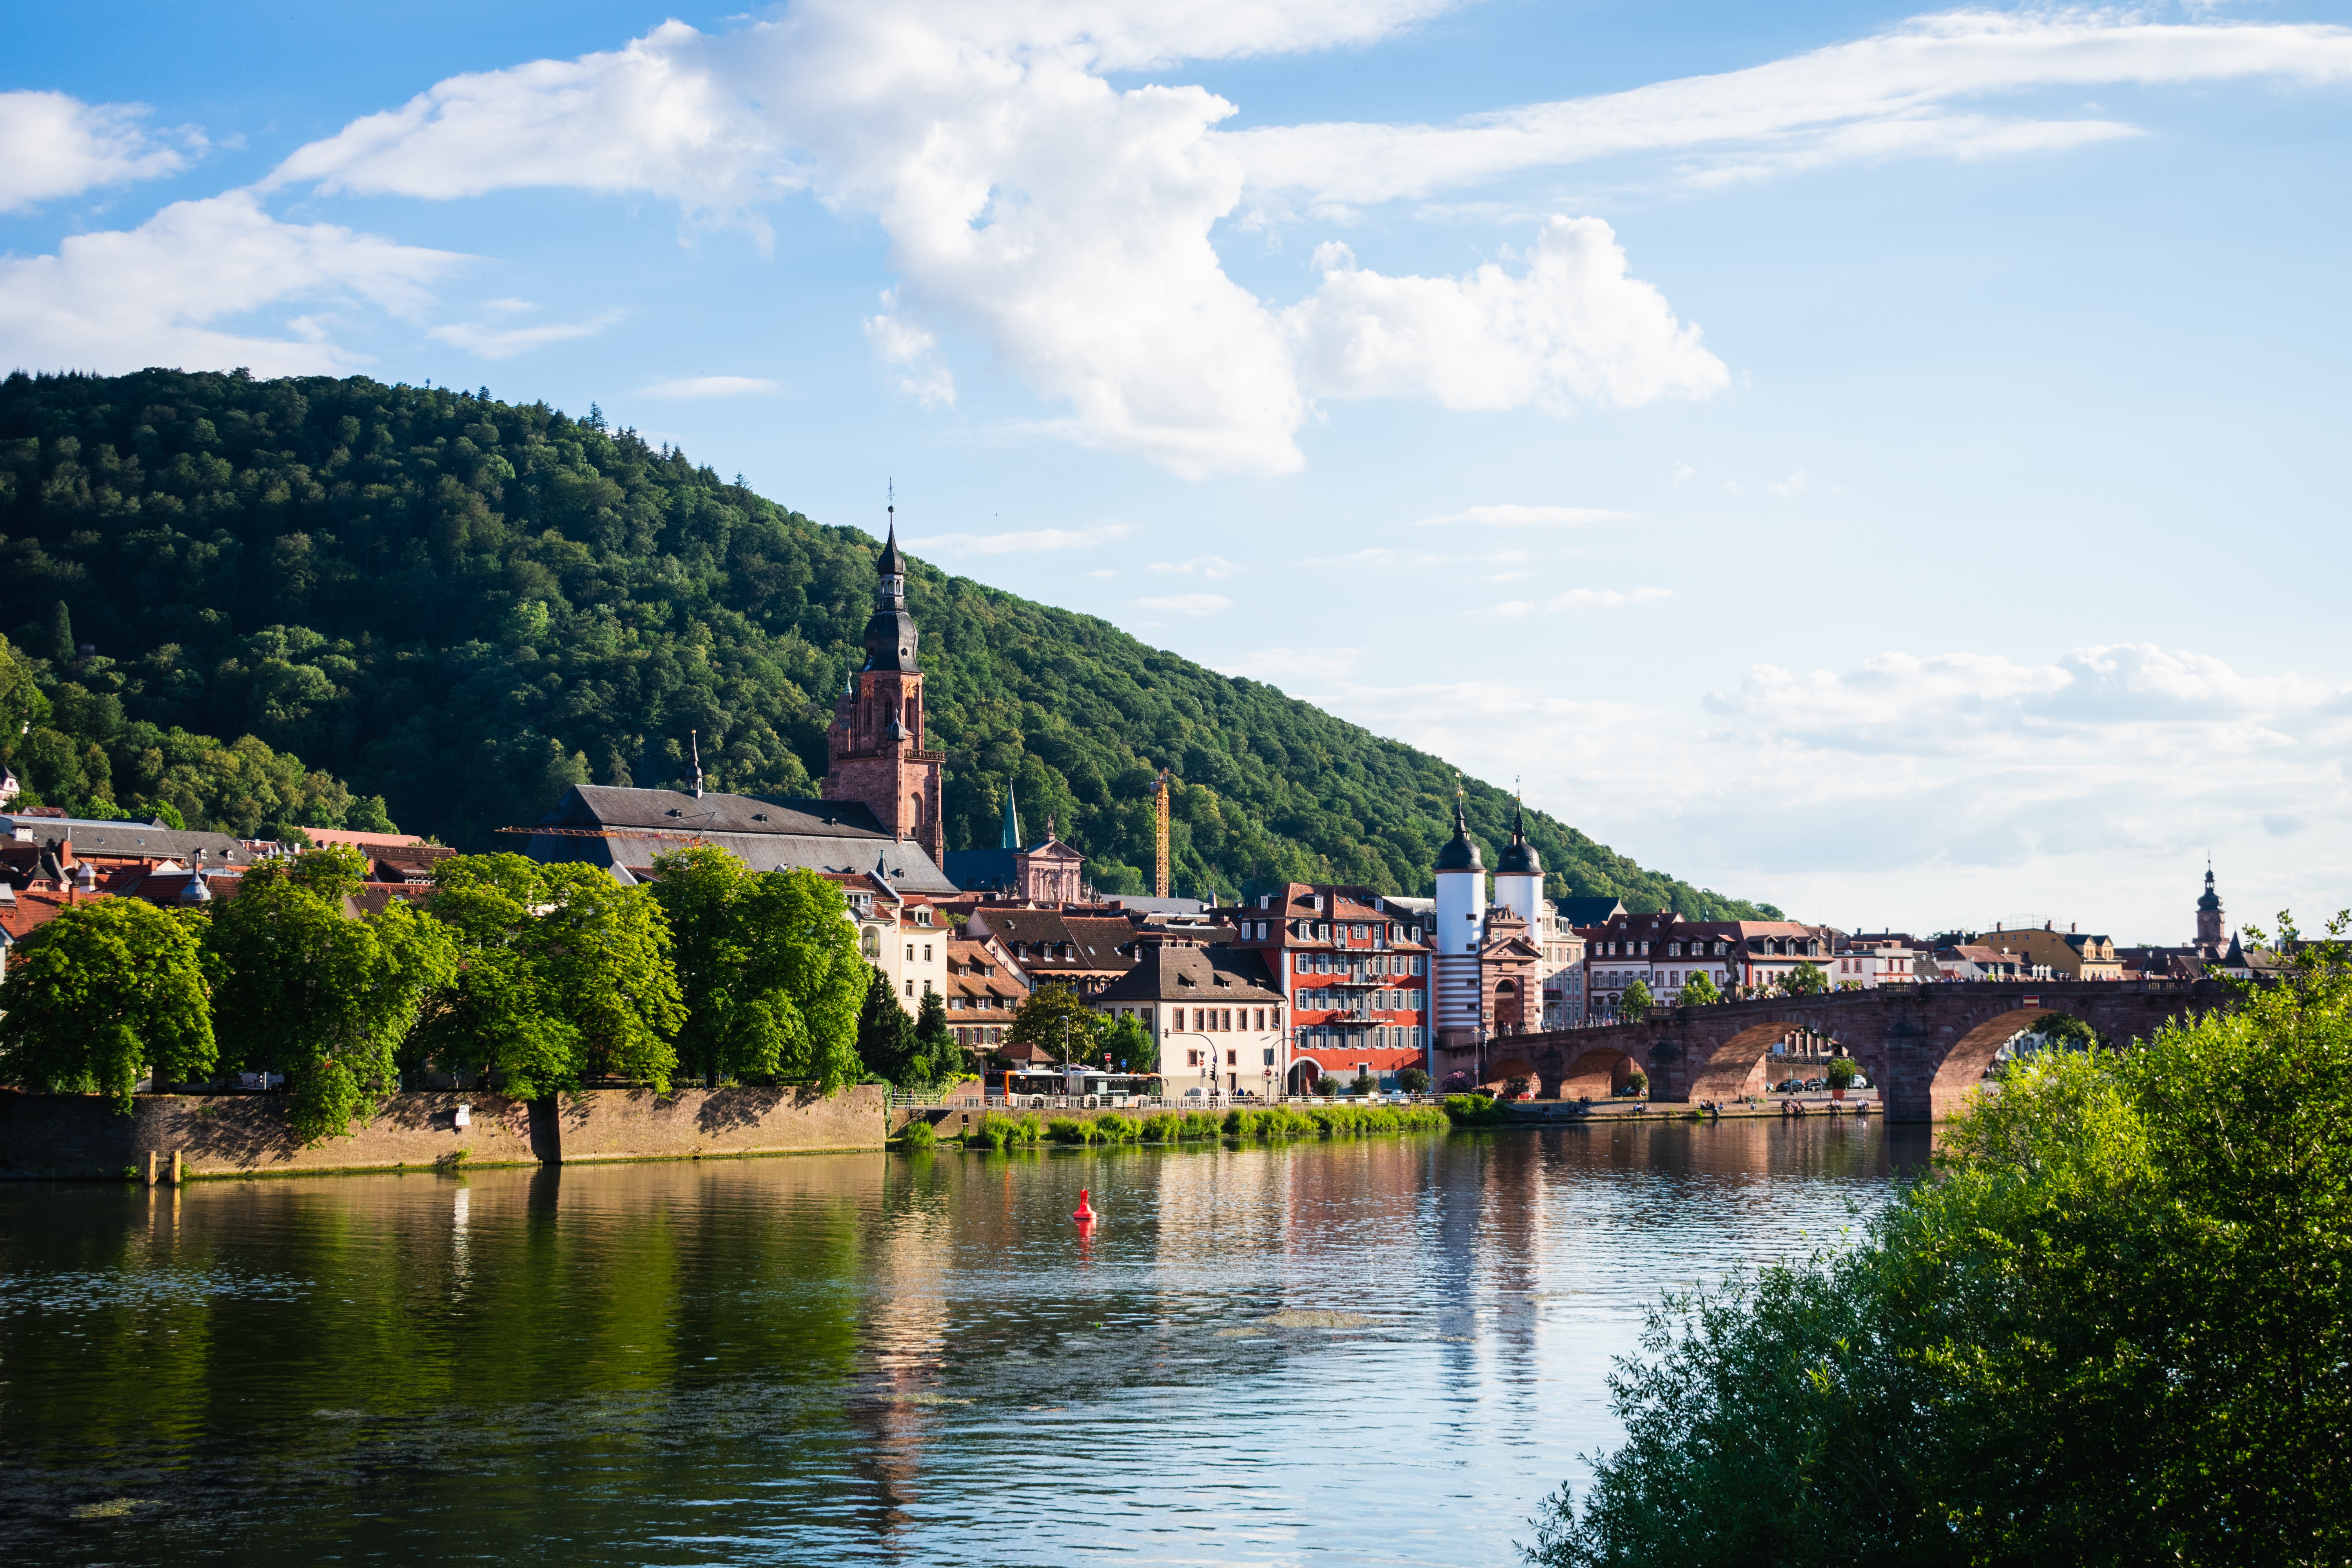 Stroll along the River Neckar & Alte Brucke